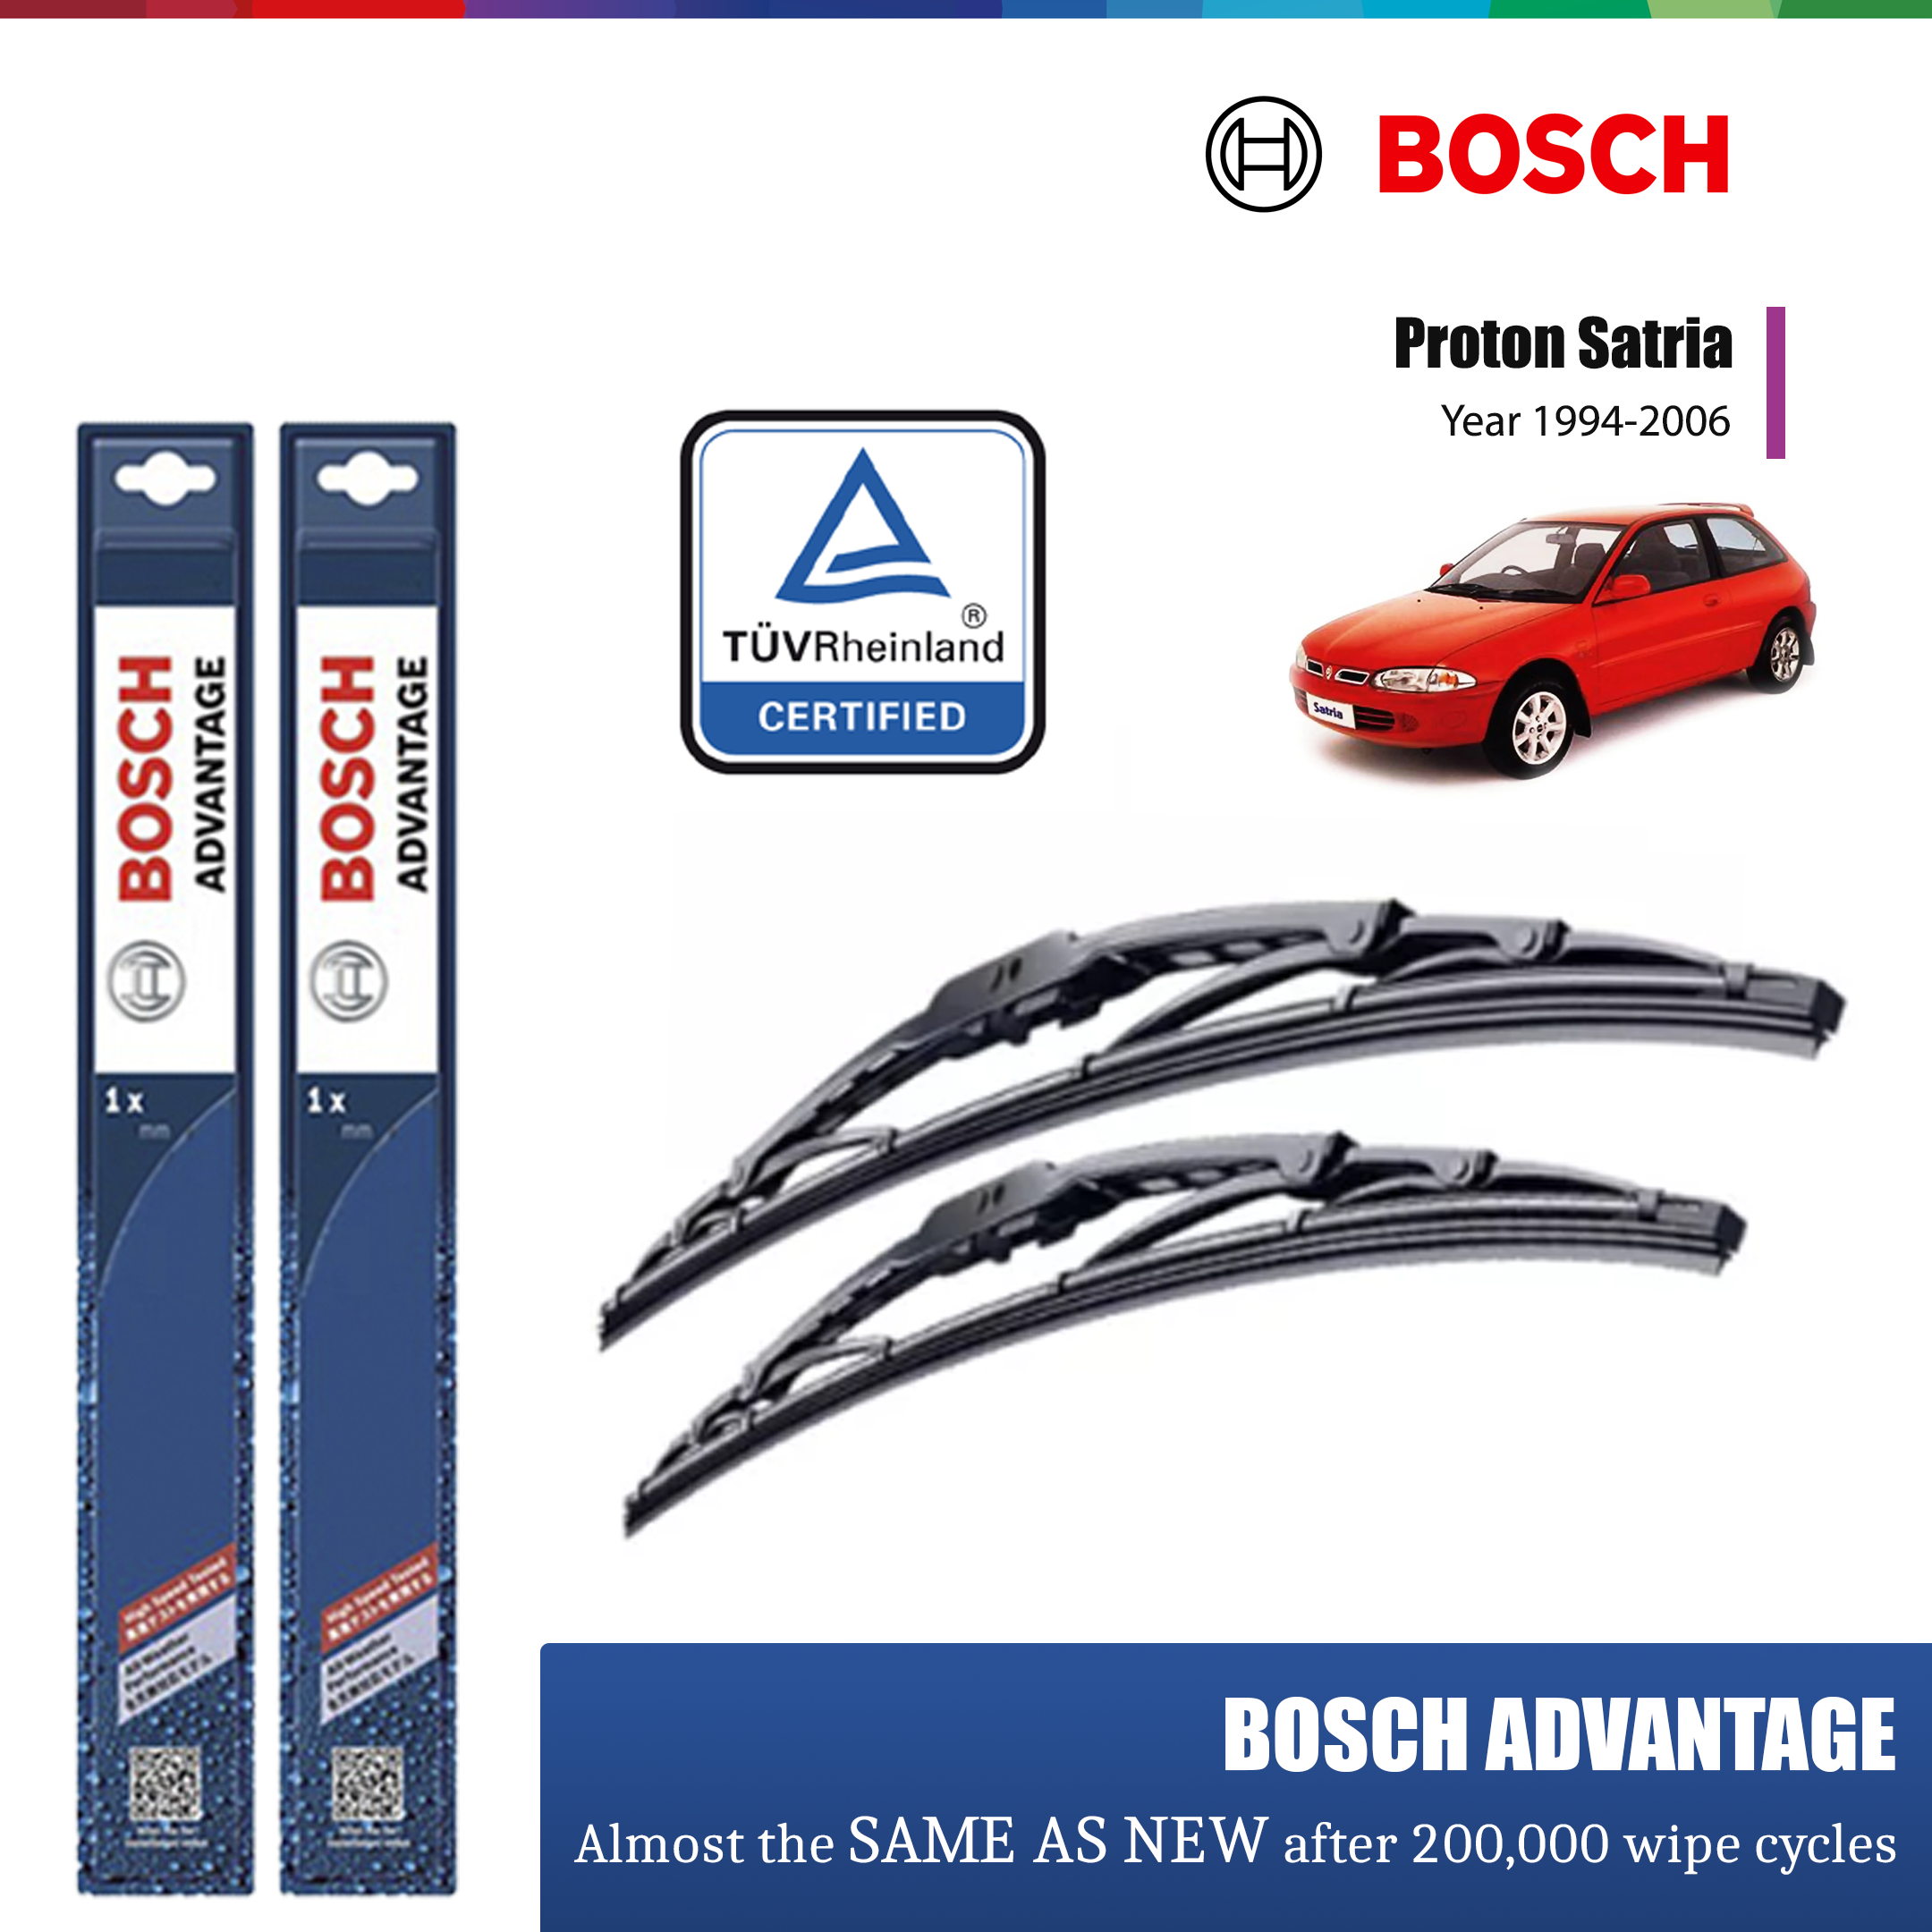 Bosch Oil Filter 0986AF0346 for Proton Wira / Satria / Waja / Putra /  Persona / Saga / FL / FLX / Exora / Preve - auto2u